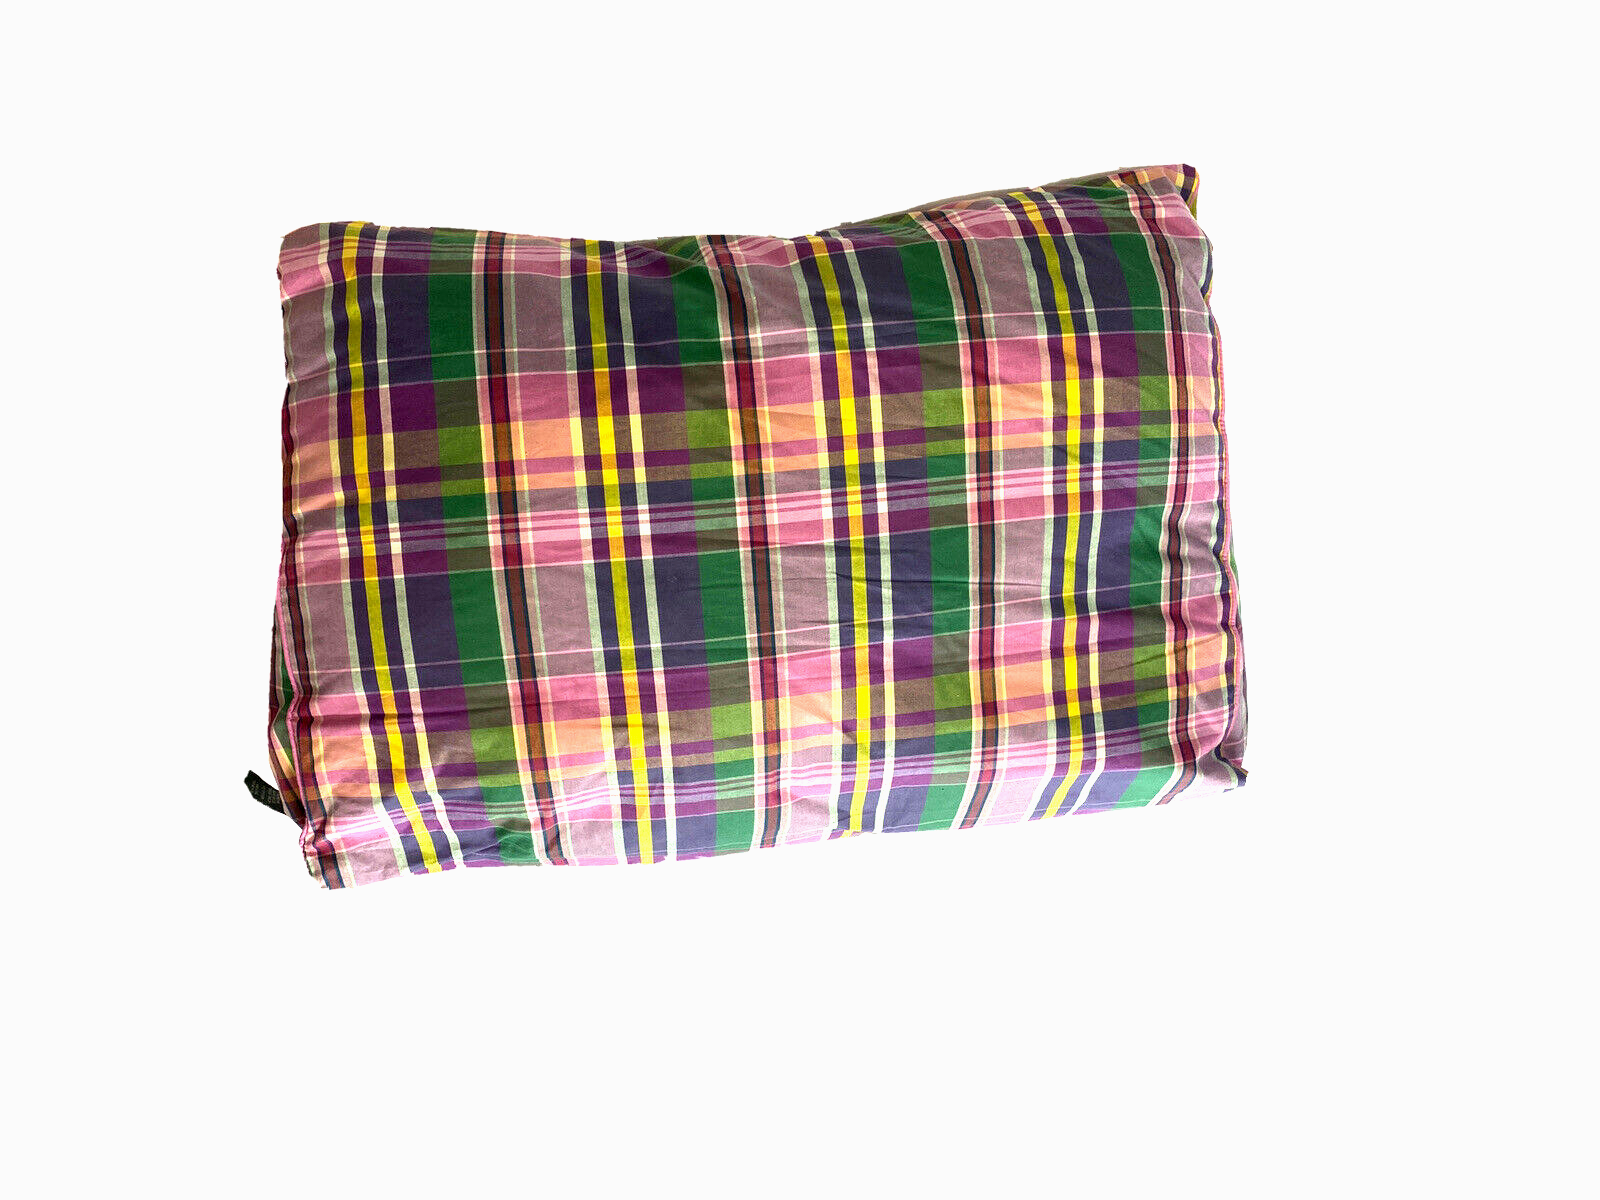 Ralph lauren vintage wedge pillow plaid pink purple discontinued s bedding htf